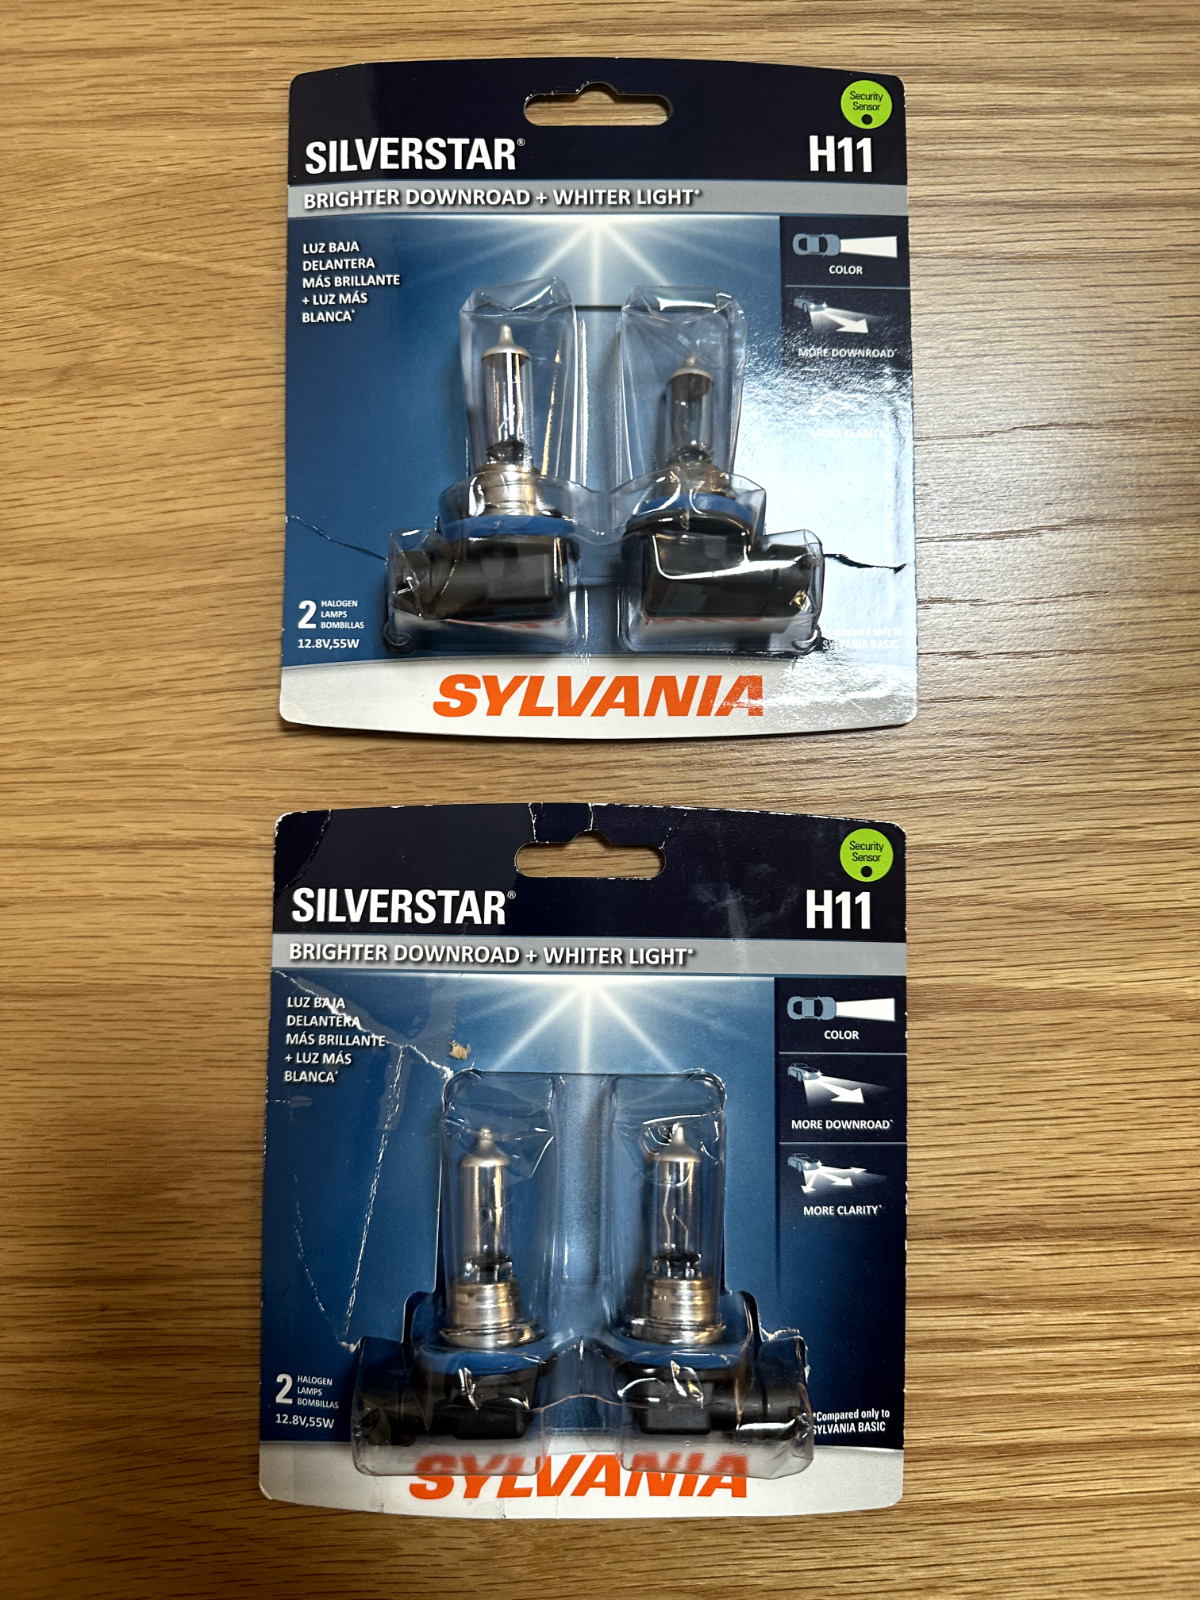 Sylvania Silverstar H11 Pair Set High Performance Headlight (2) Pairs, (4) Bulbs